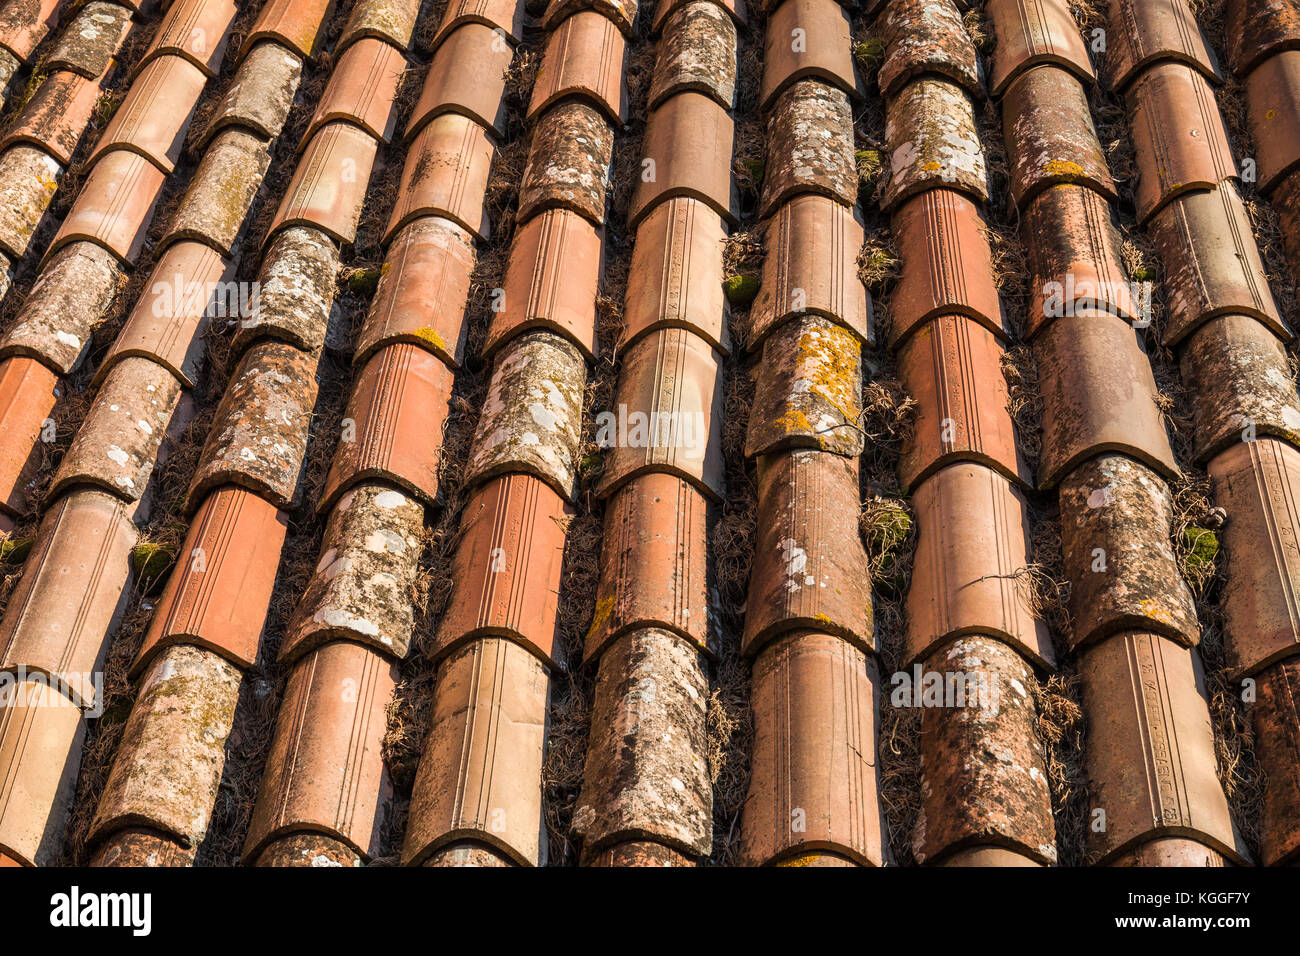 Roof shingles texture Stock Photo